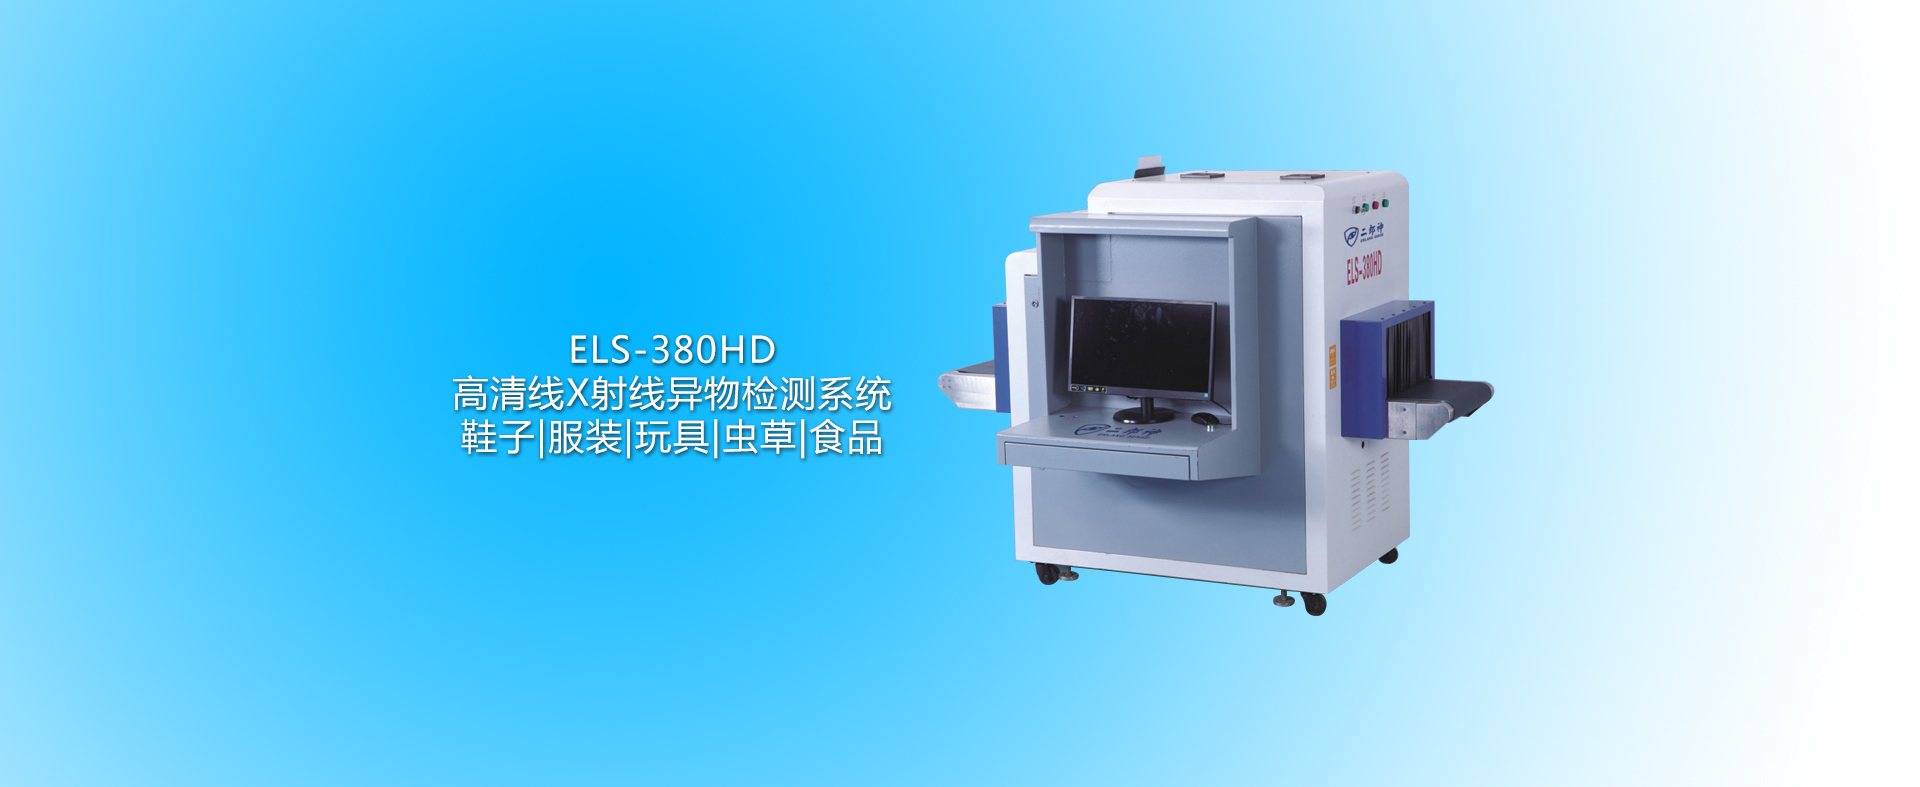 ELS-380HD 高清线X射线异物检测系统